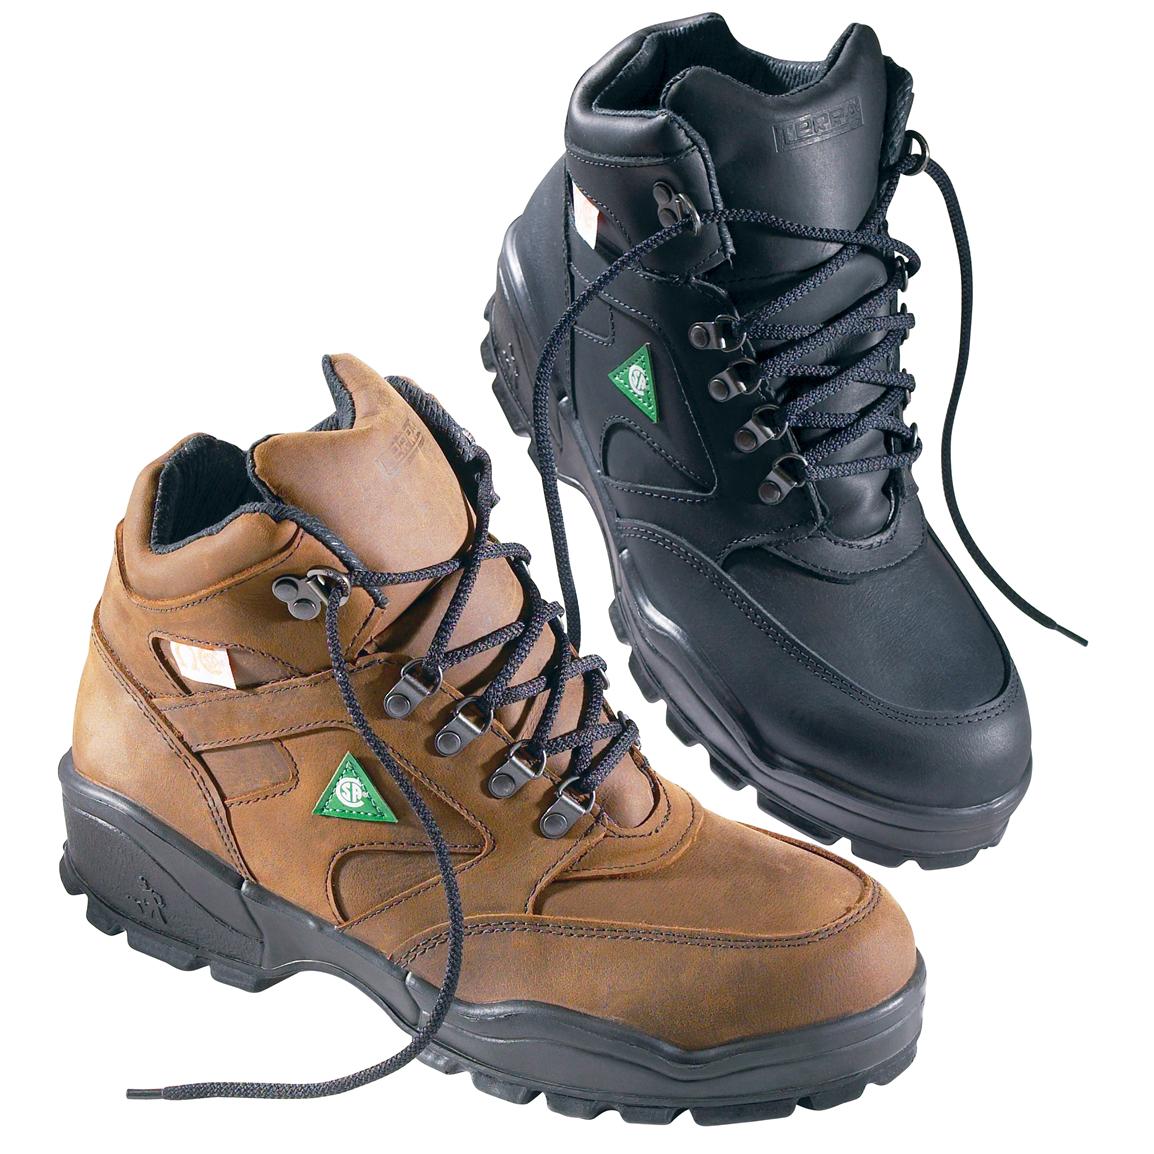 Men's TerraÂ® Steel Toe AL Series Boots - 33966, Work Boots at Sportsman's Guide